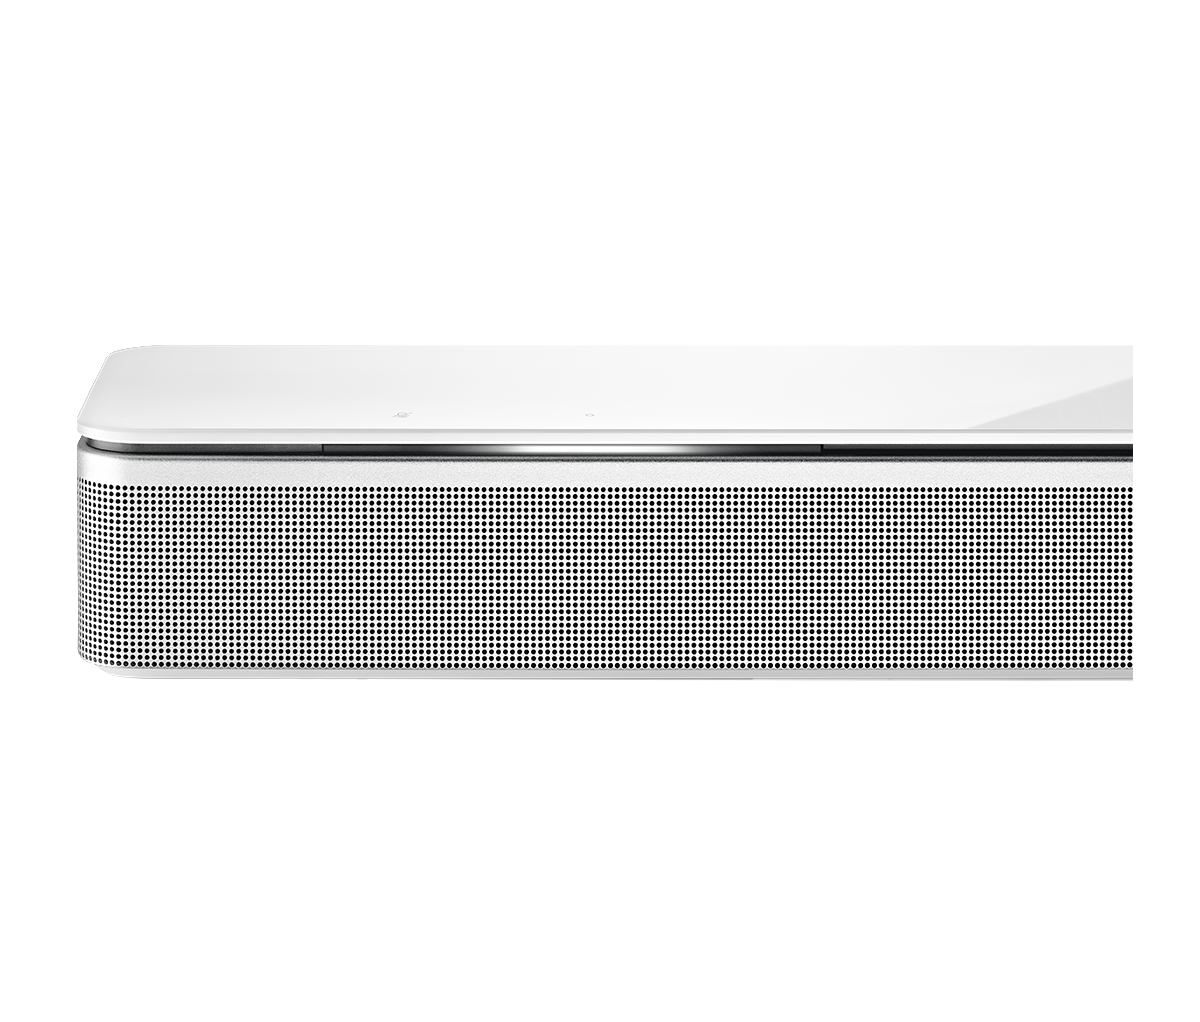 Image of Bose Smart Soundbar 700 – Refurbished Arctic White UK ID 0017817794428